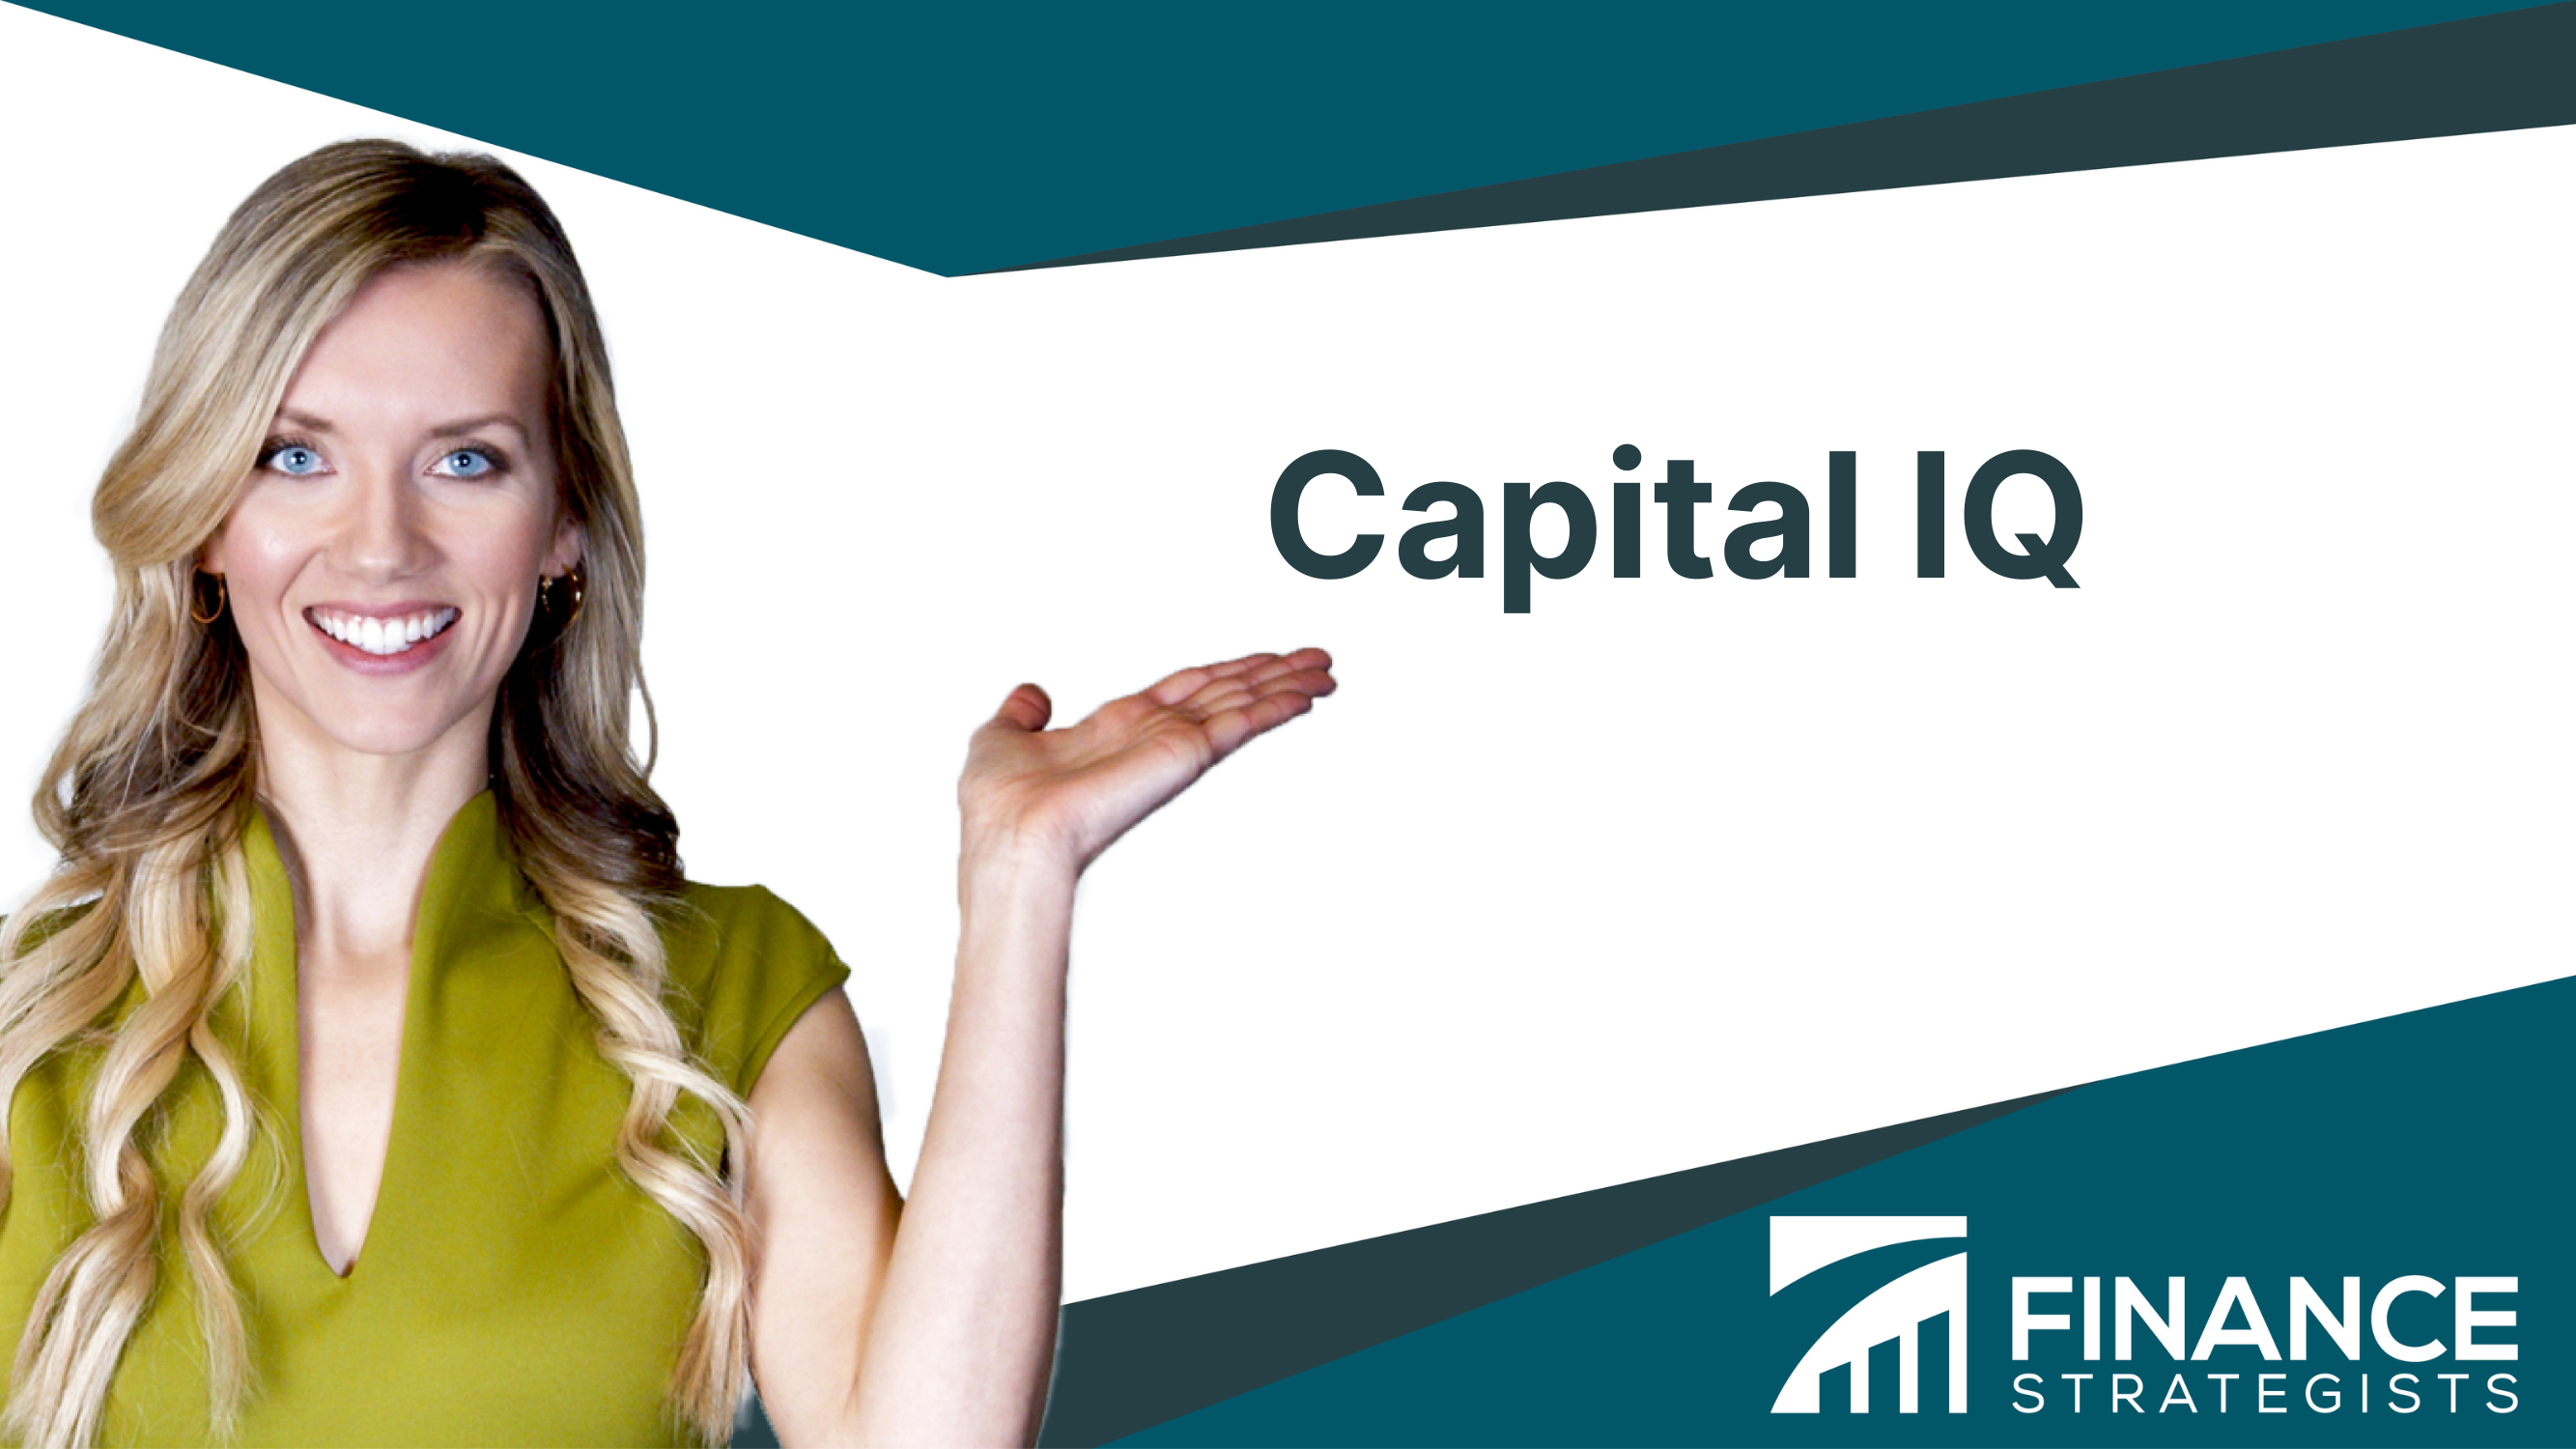 Capital IQ Definition, Key Features, Advantages, & Limitations